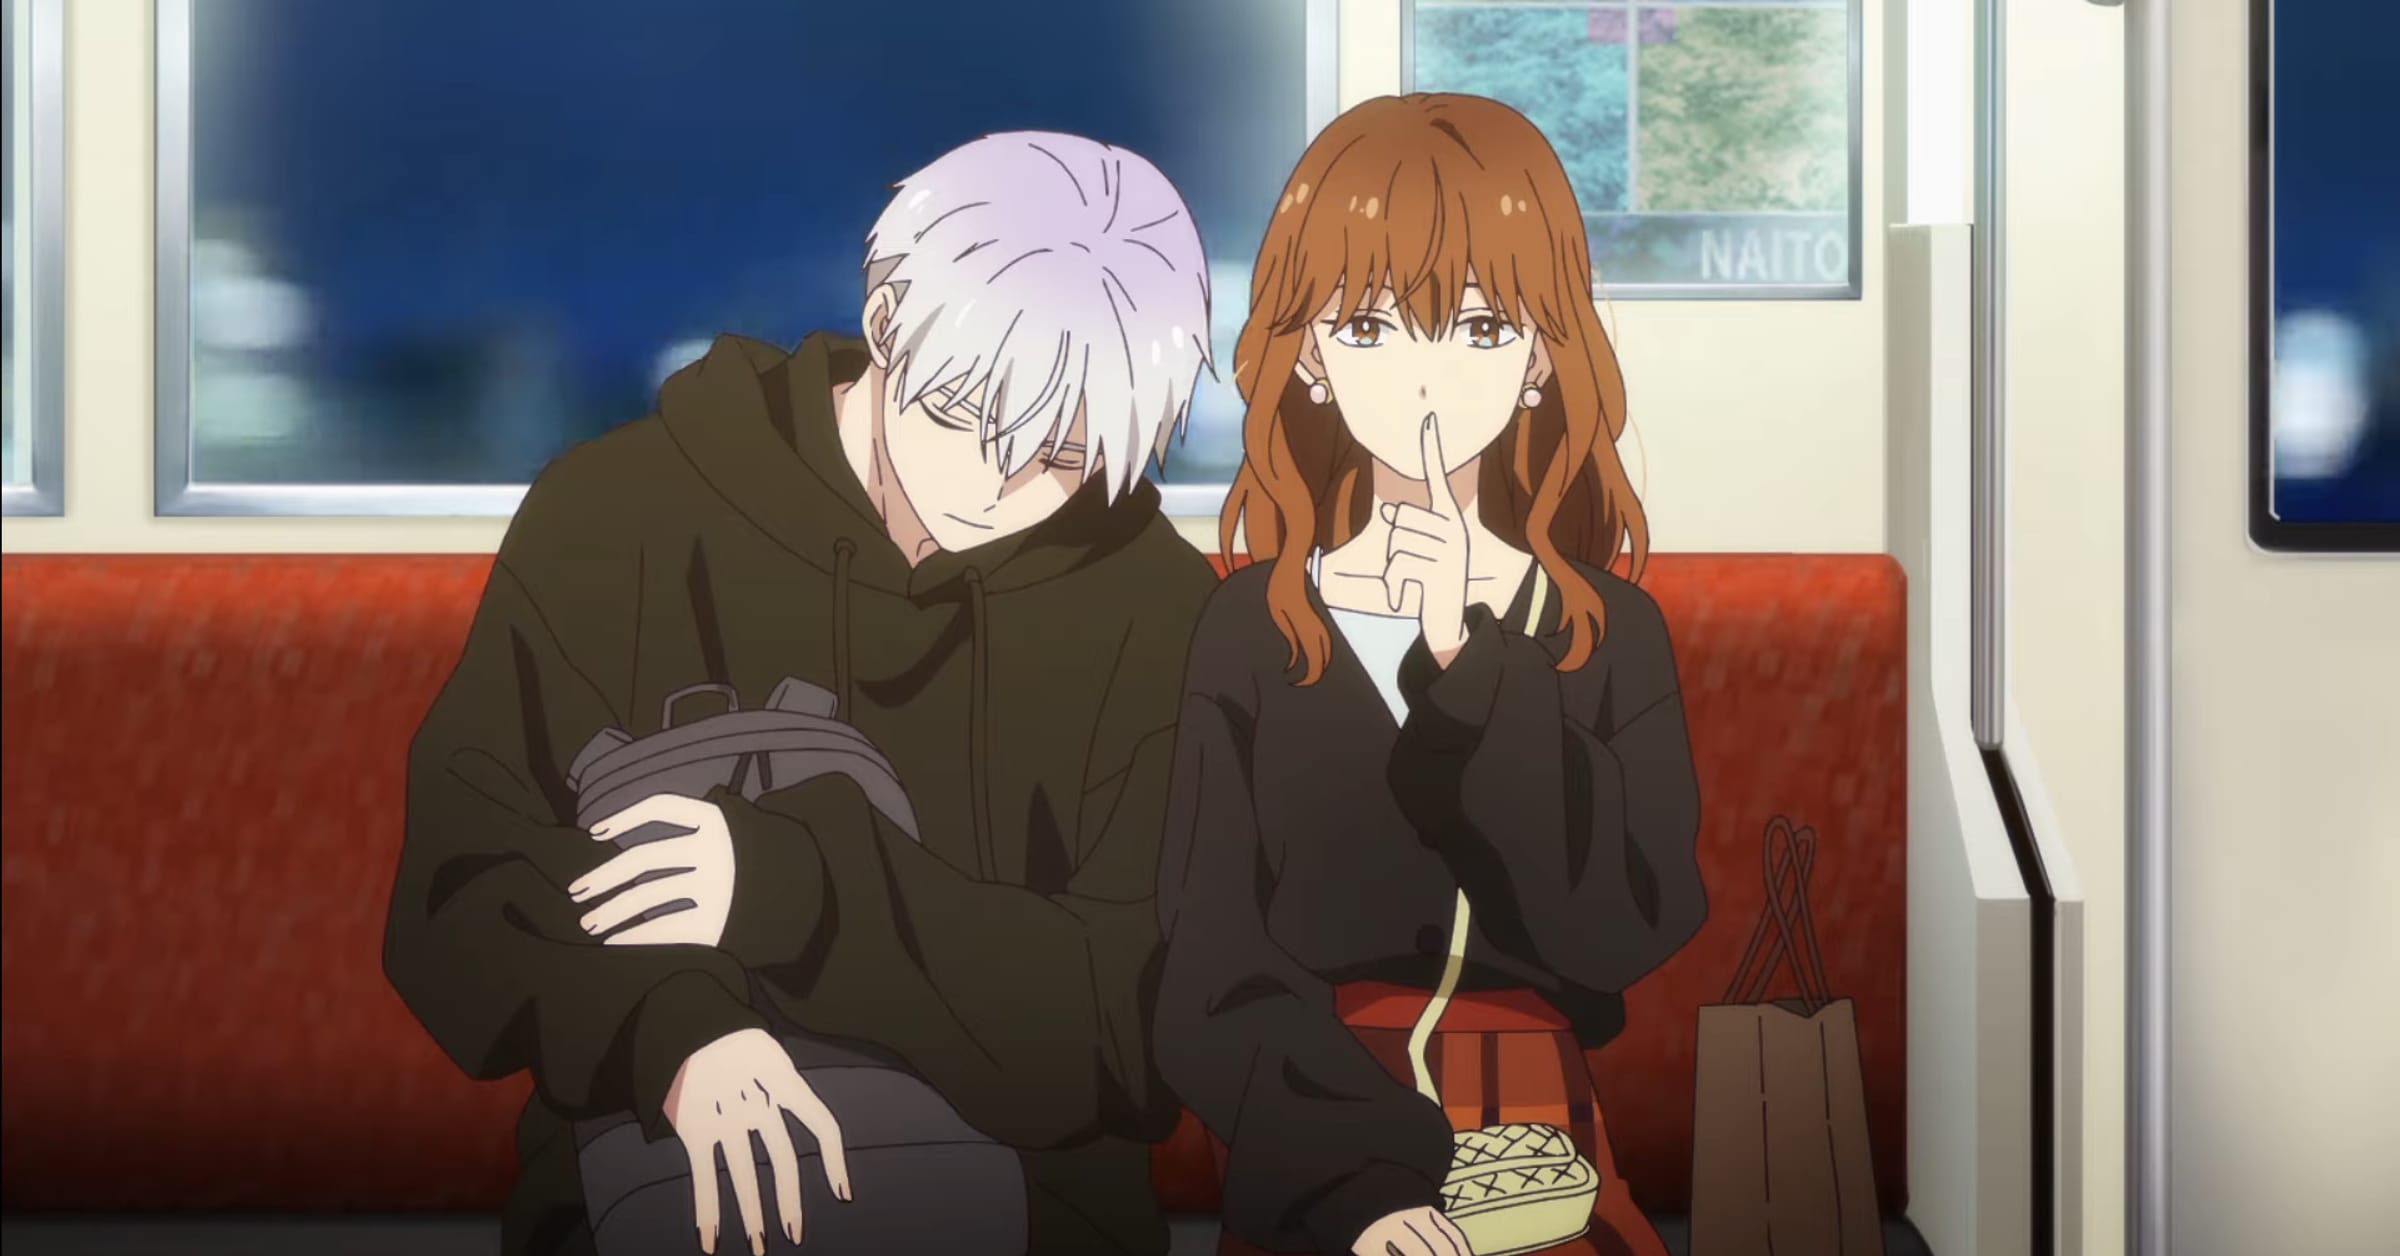 Sasaki and Miyano Episode 1 - Beginning of a Wholesome Romance